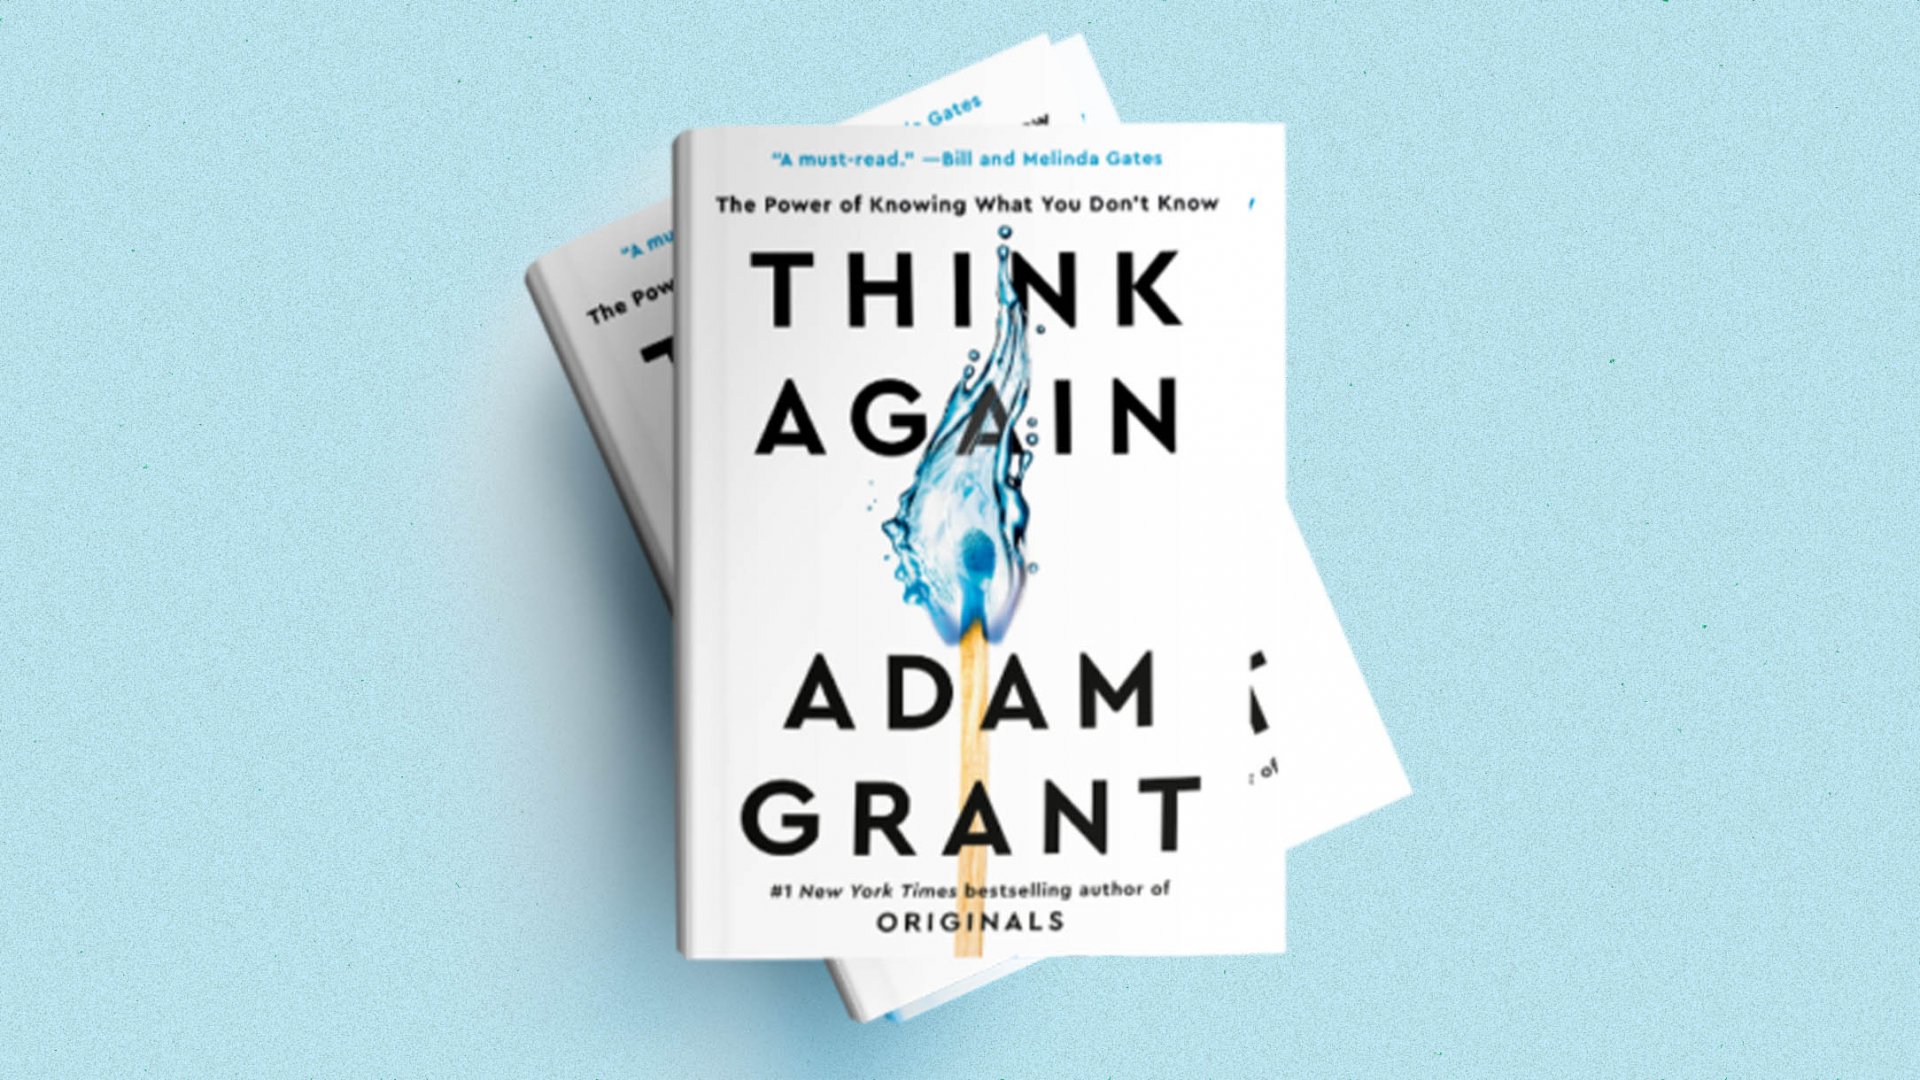 Granted more. Think again. Think again книга. Grant, Adam "think again".